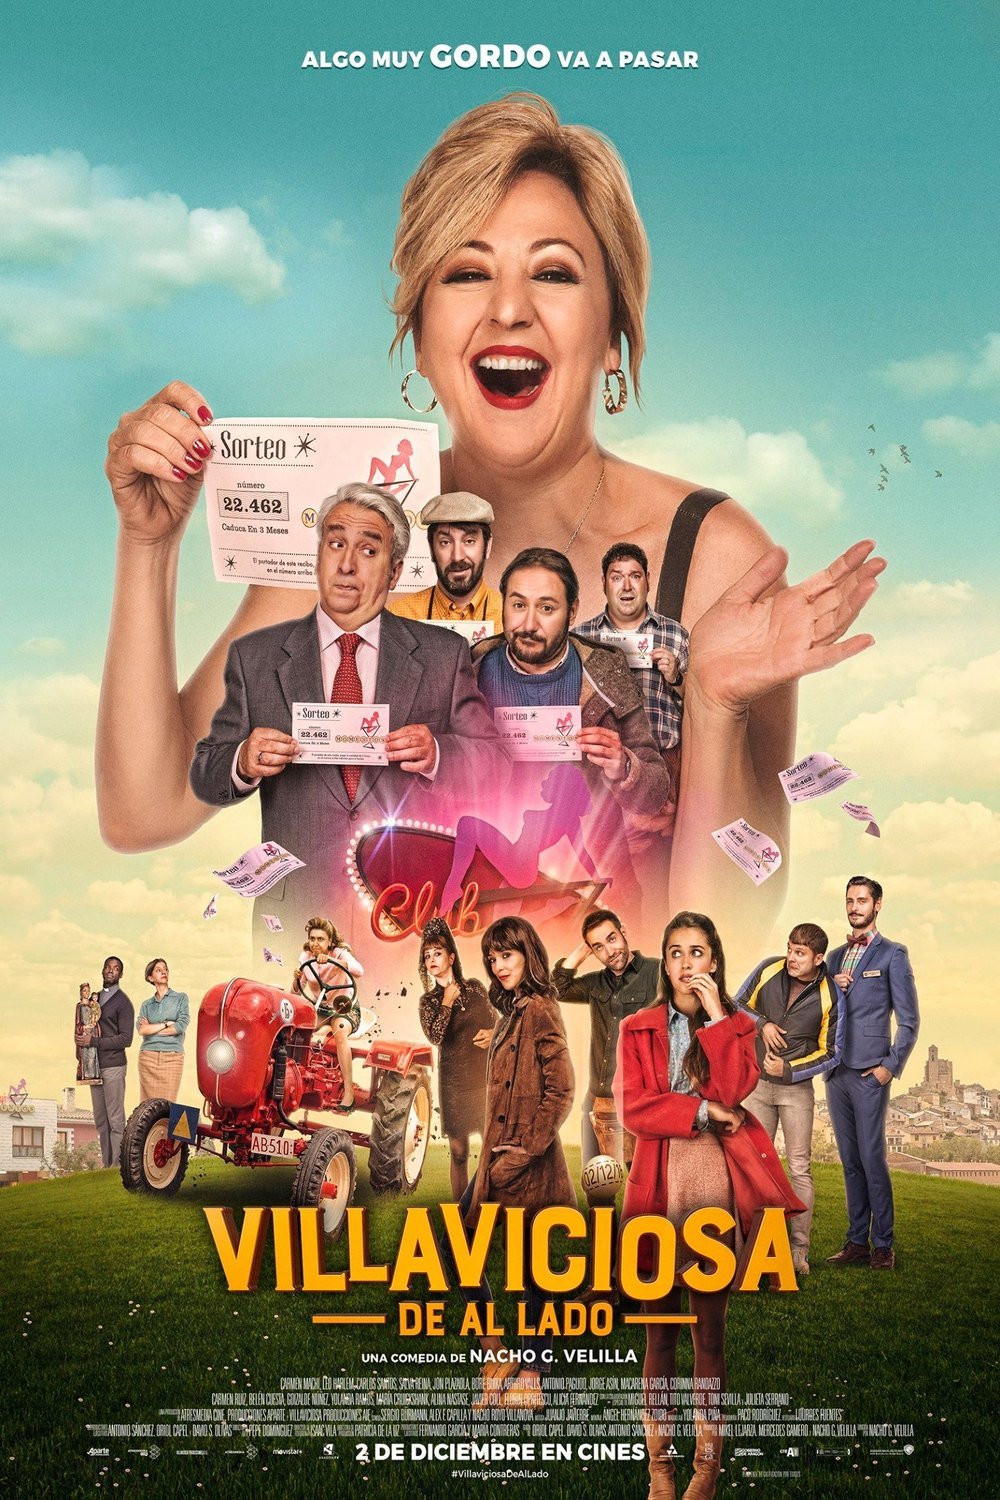 Spanish poster of the movie Villaviciosa de al lado